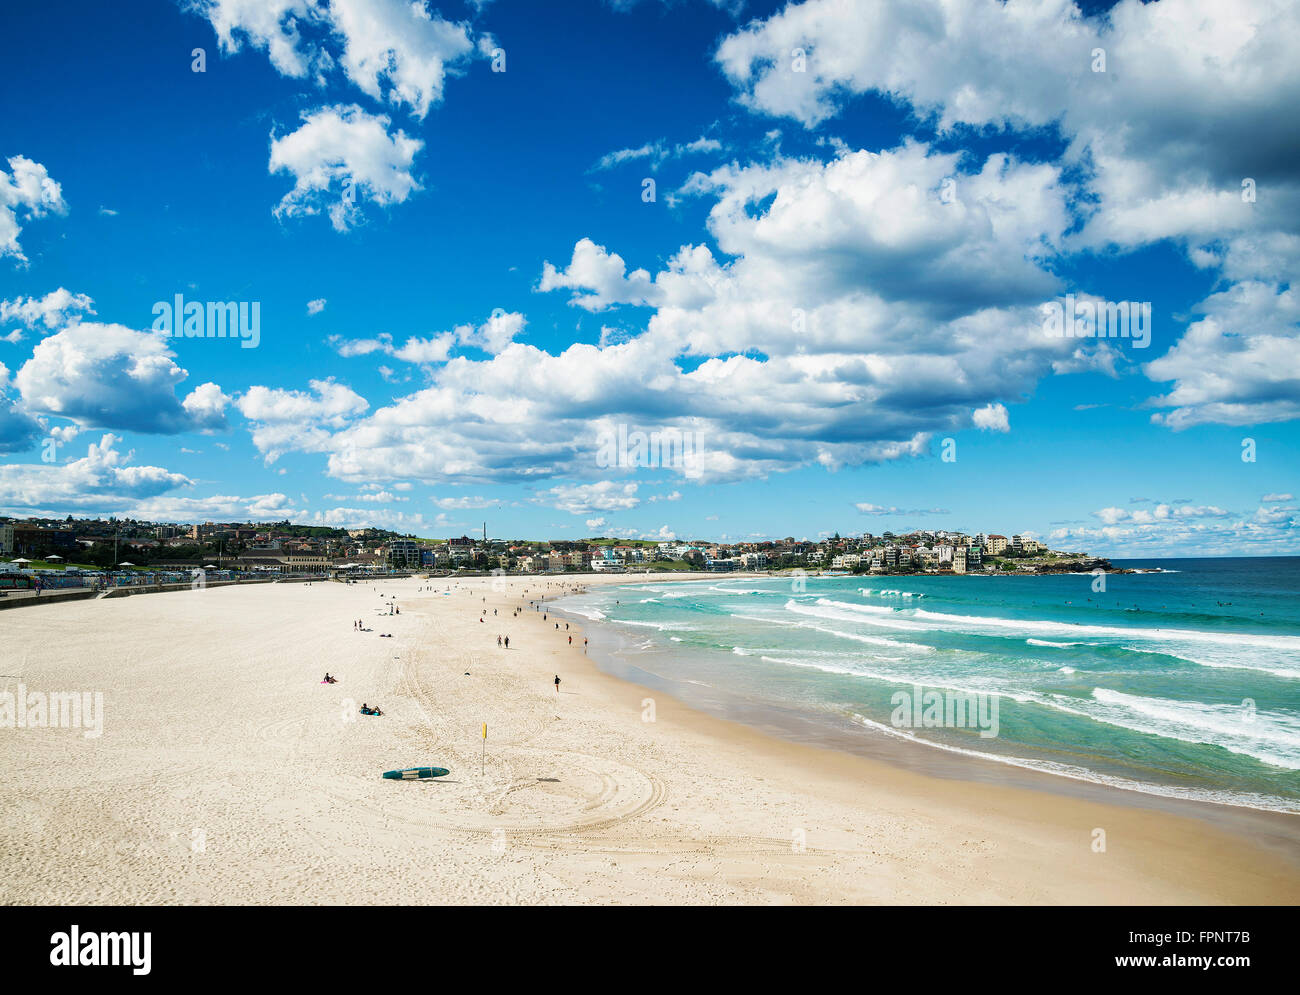 view of famous bondi beach in sydney australia by day Stock Photo